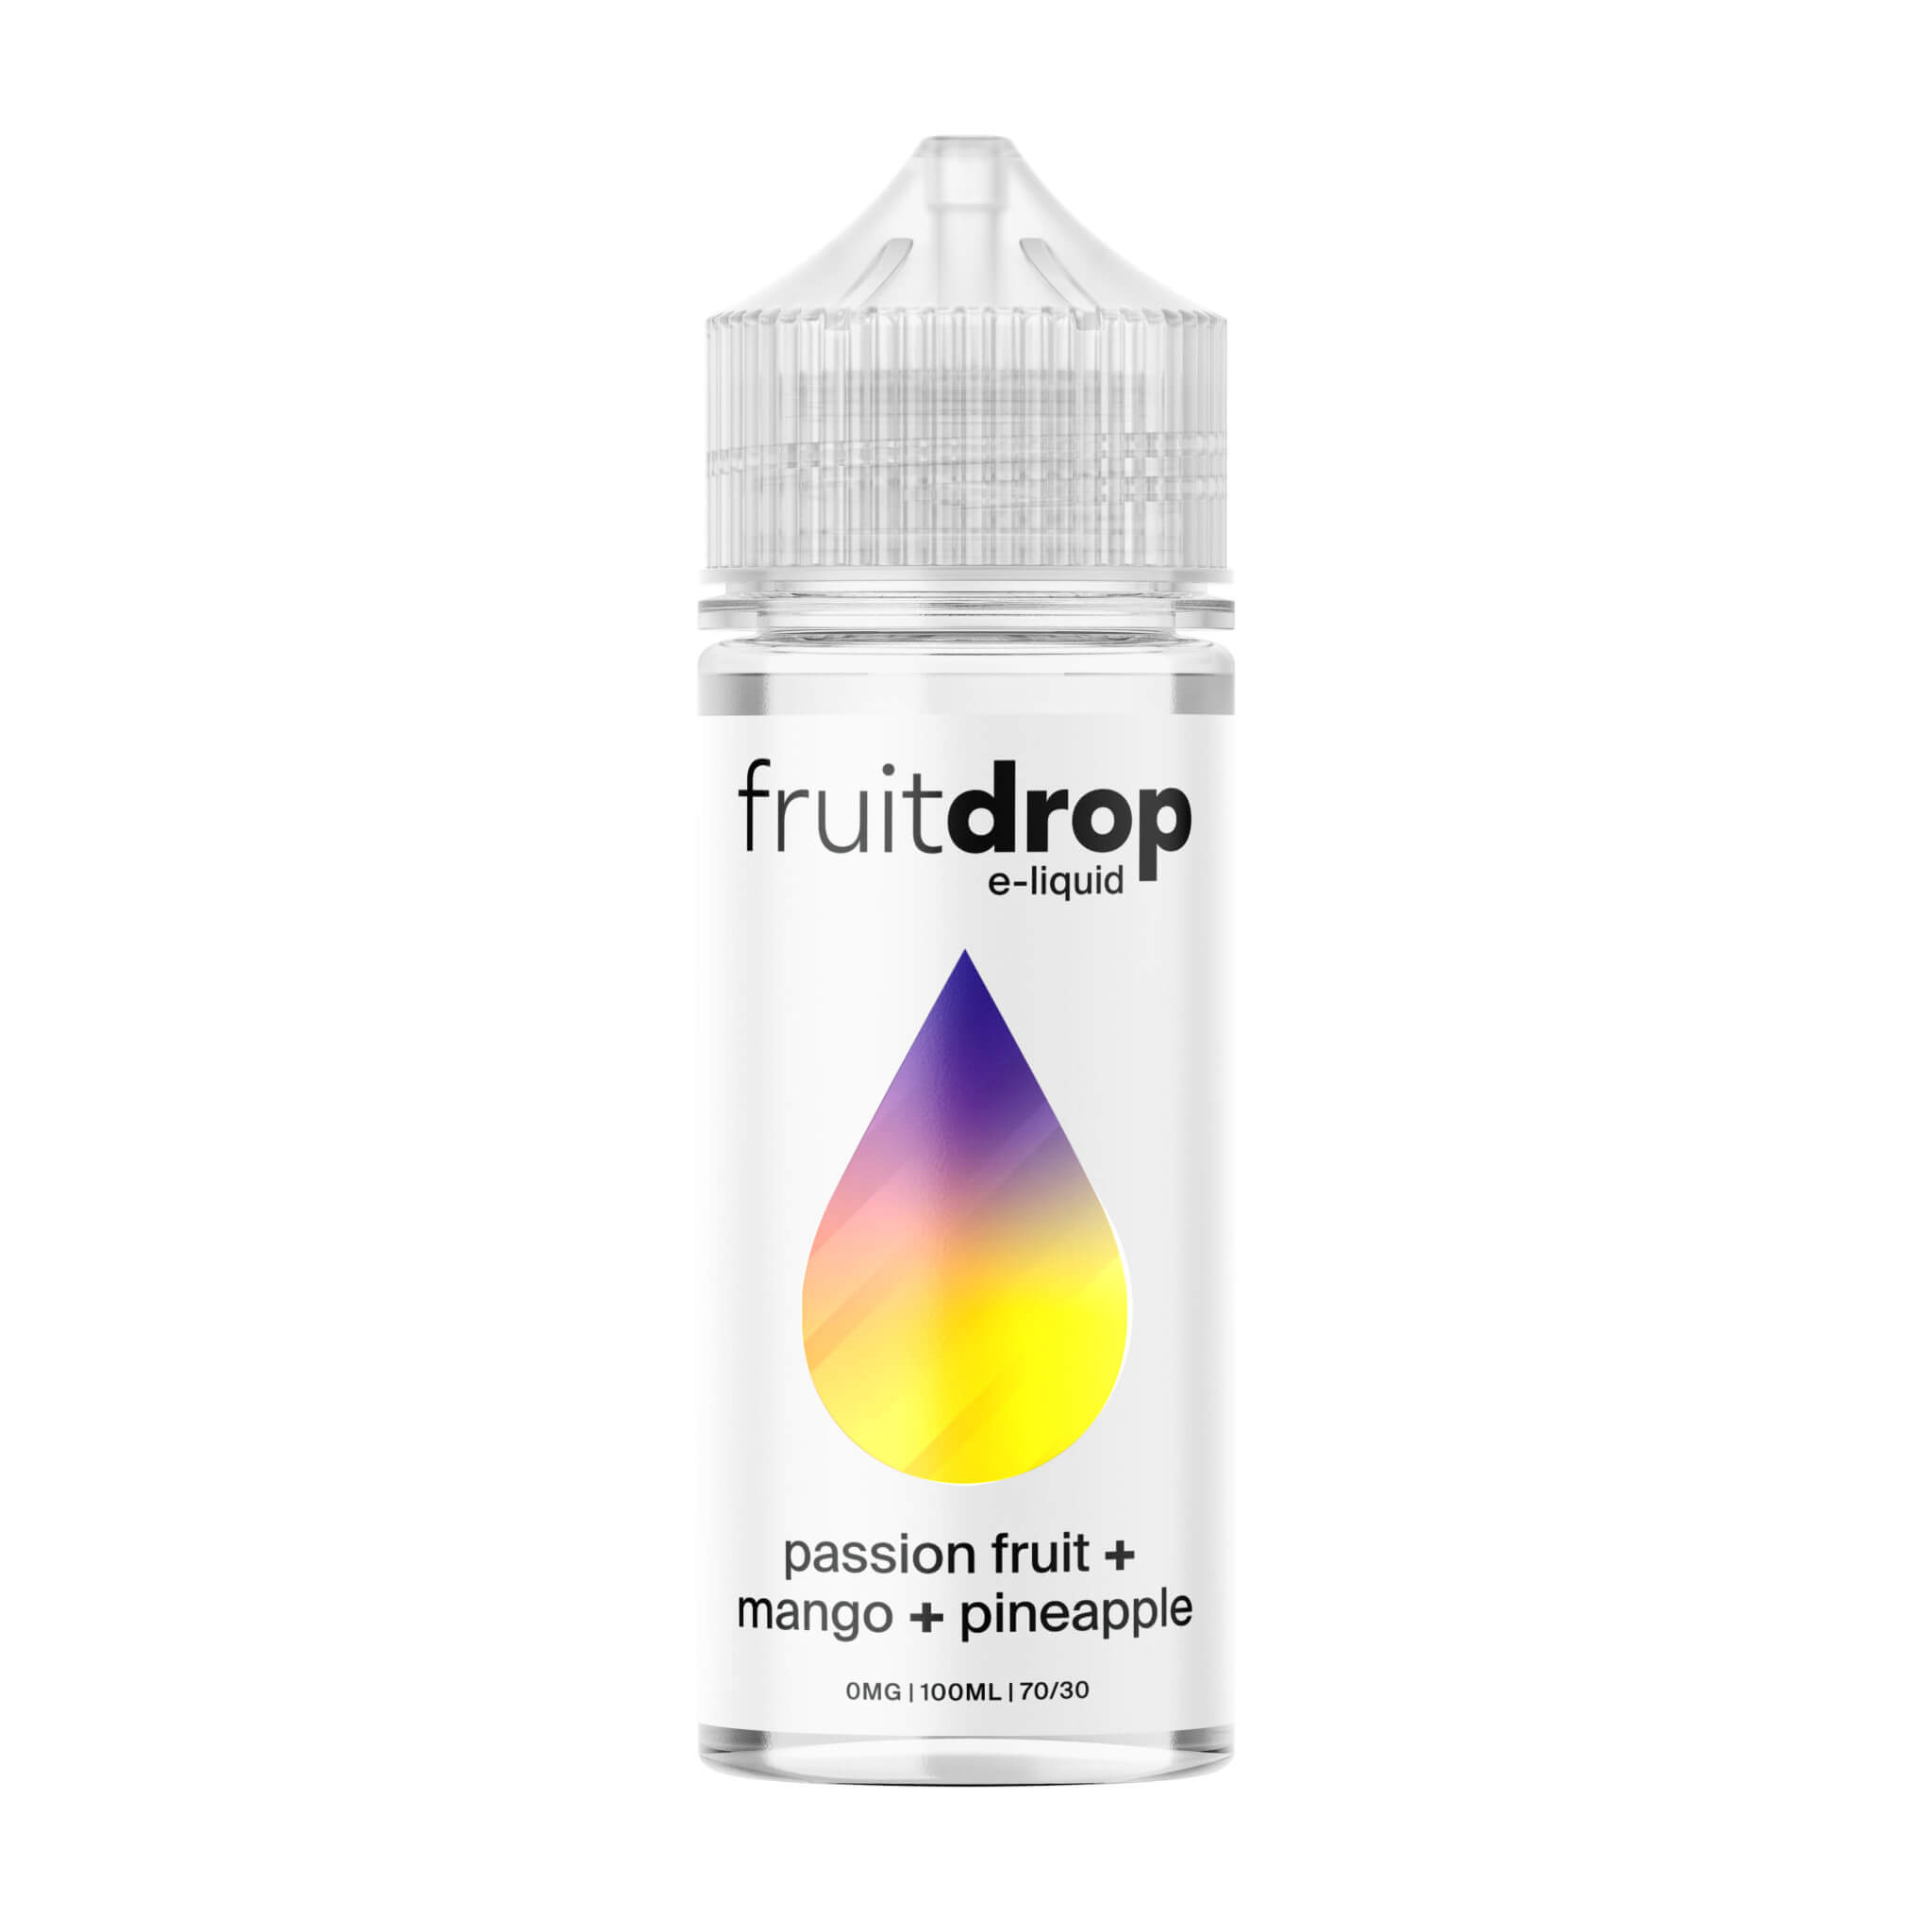 Fruit drop e-liquid passion fruit, mango & pineapple 100ml 70/30 shortfill e-liquid available at dispergo vaping uk